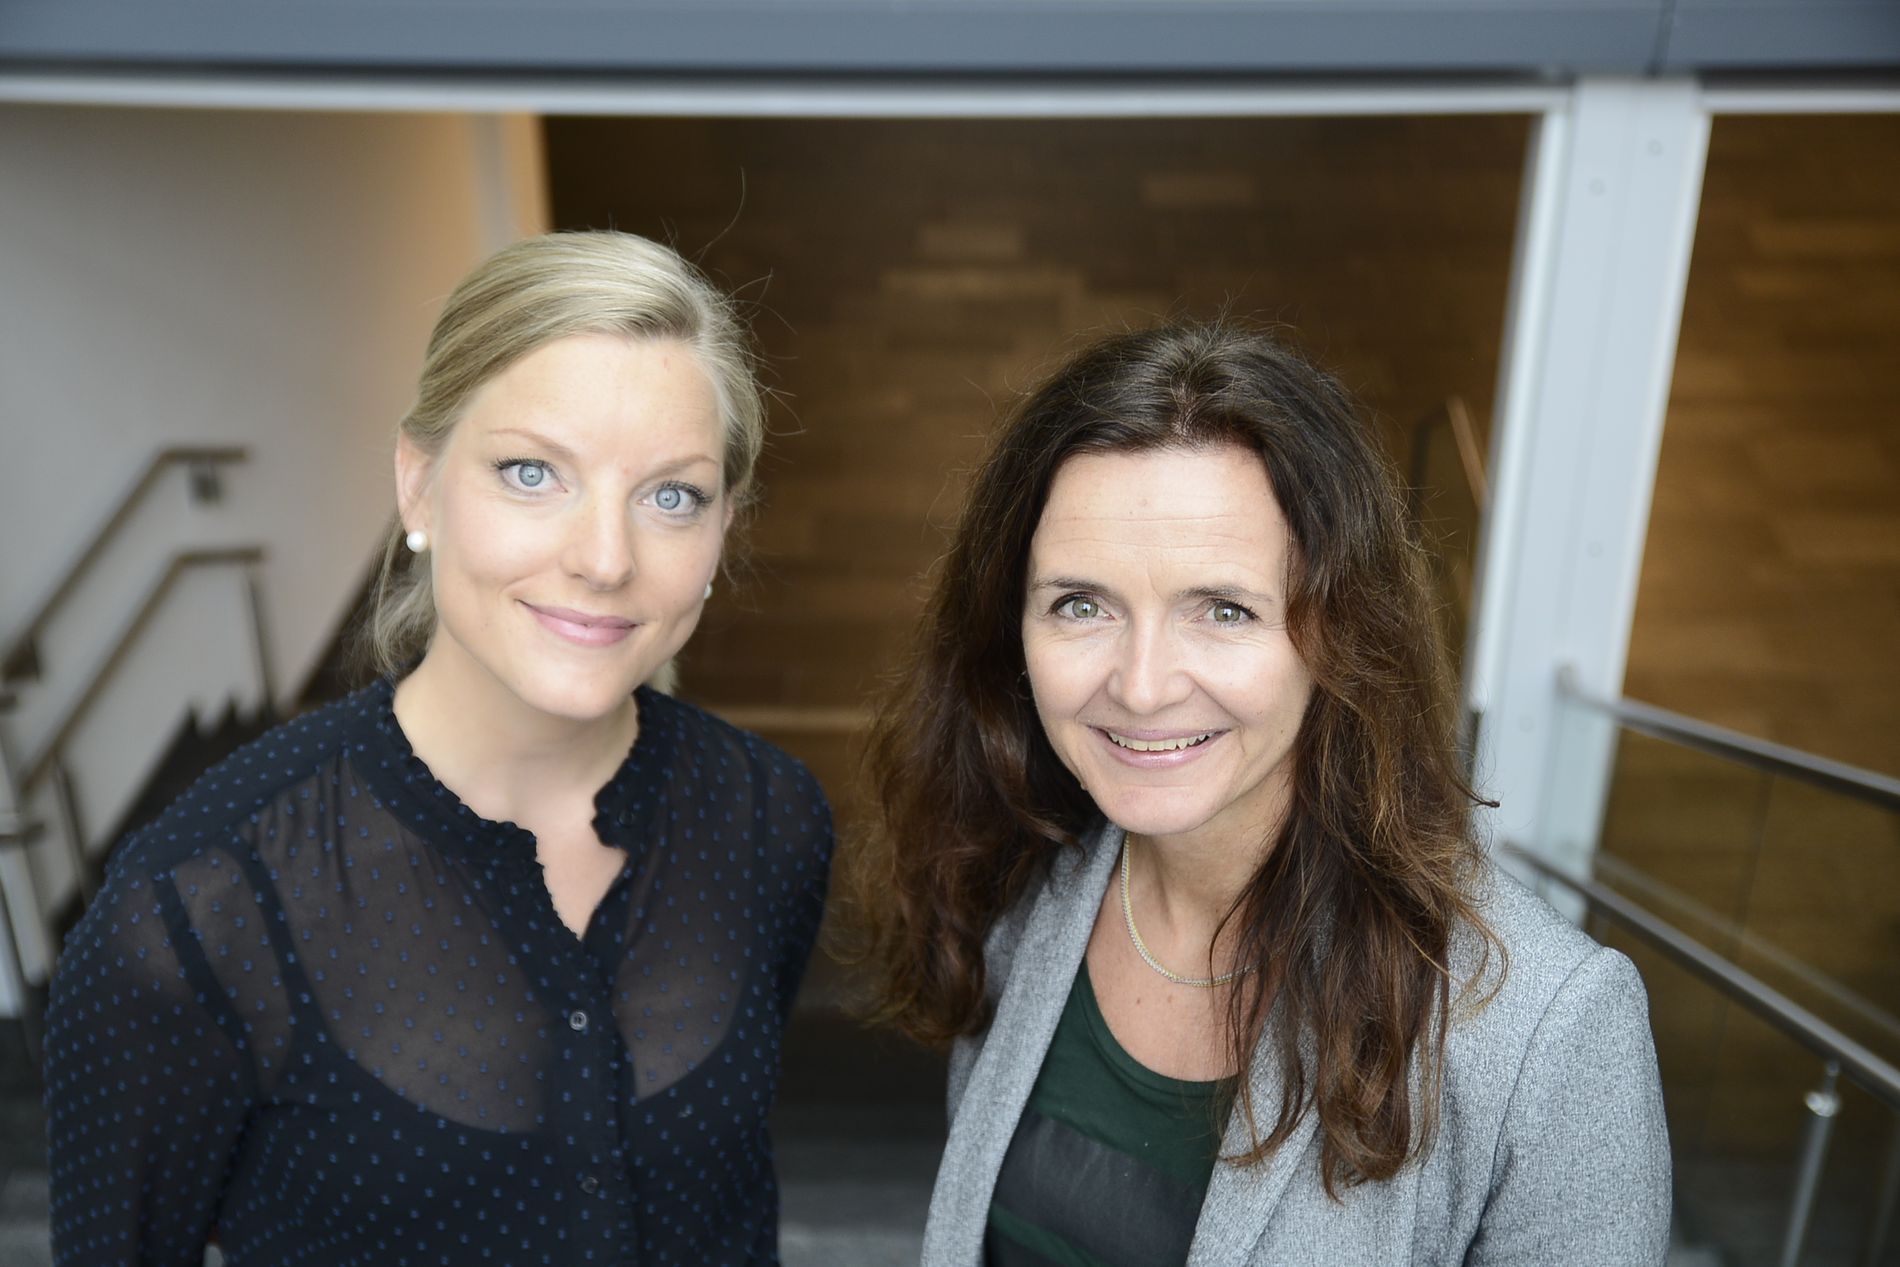 Markedssjef Ida D. Midtbø i Lyse og markedsansvarlig Hilde Willumsen i Sandnes Sparebank er sammen med Byas i juryen som har valgt ut de nominerte. 